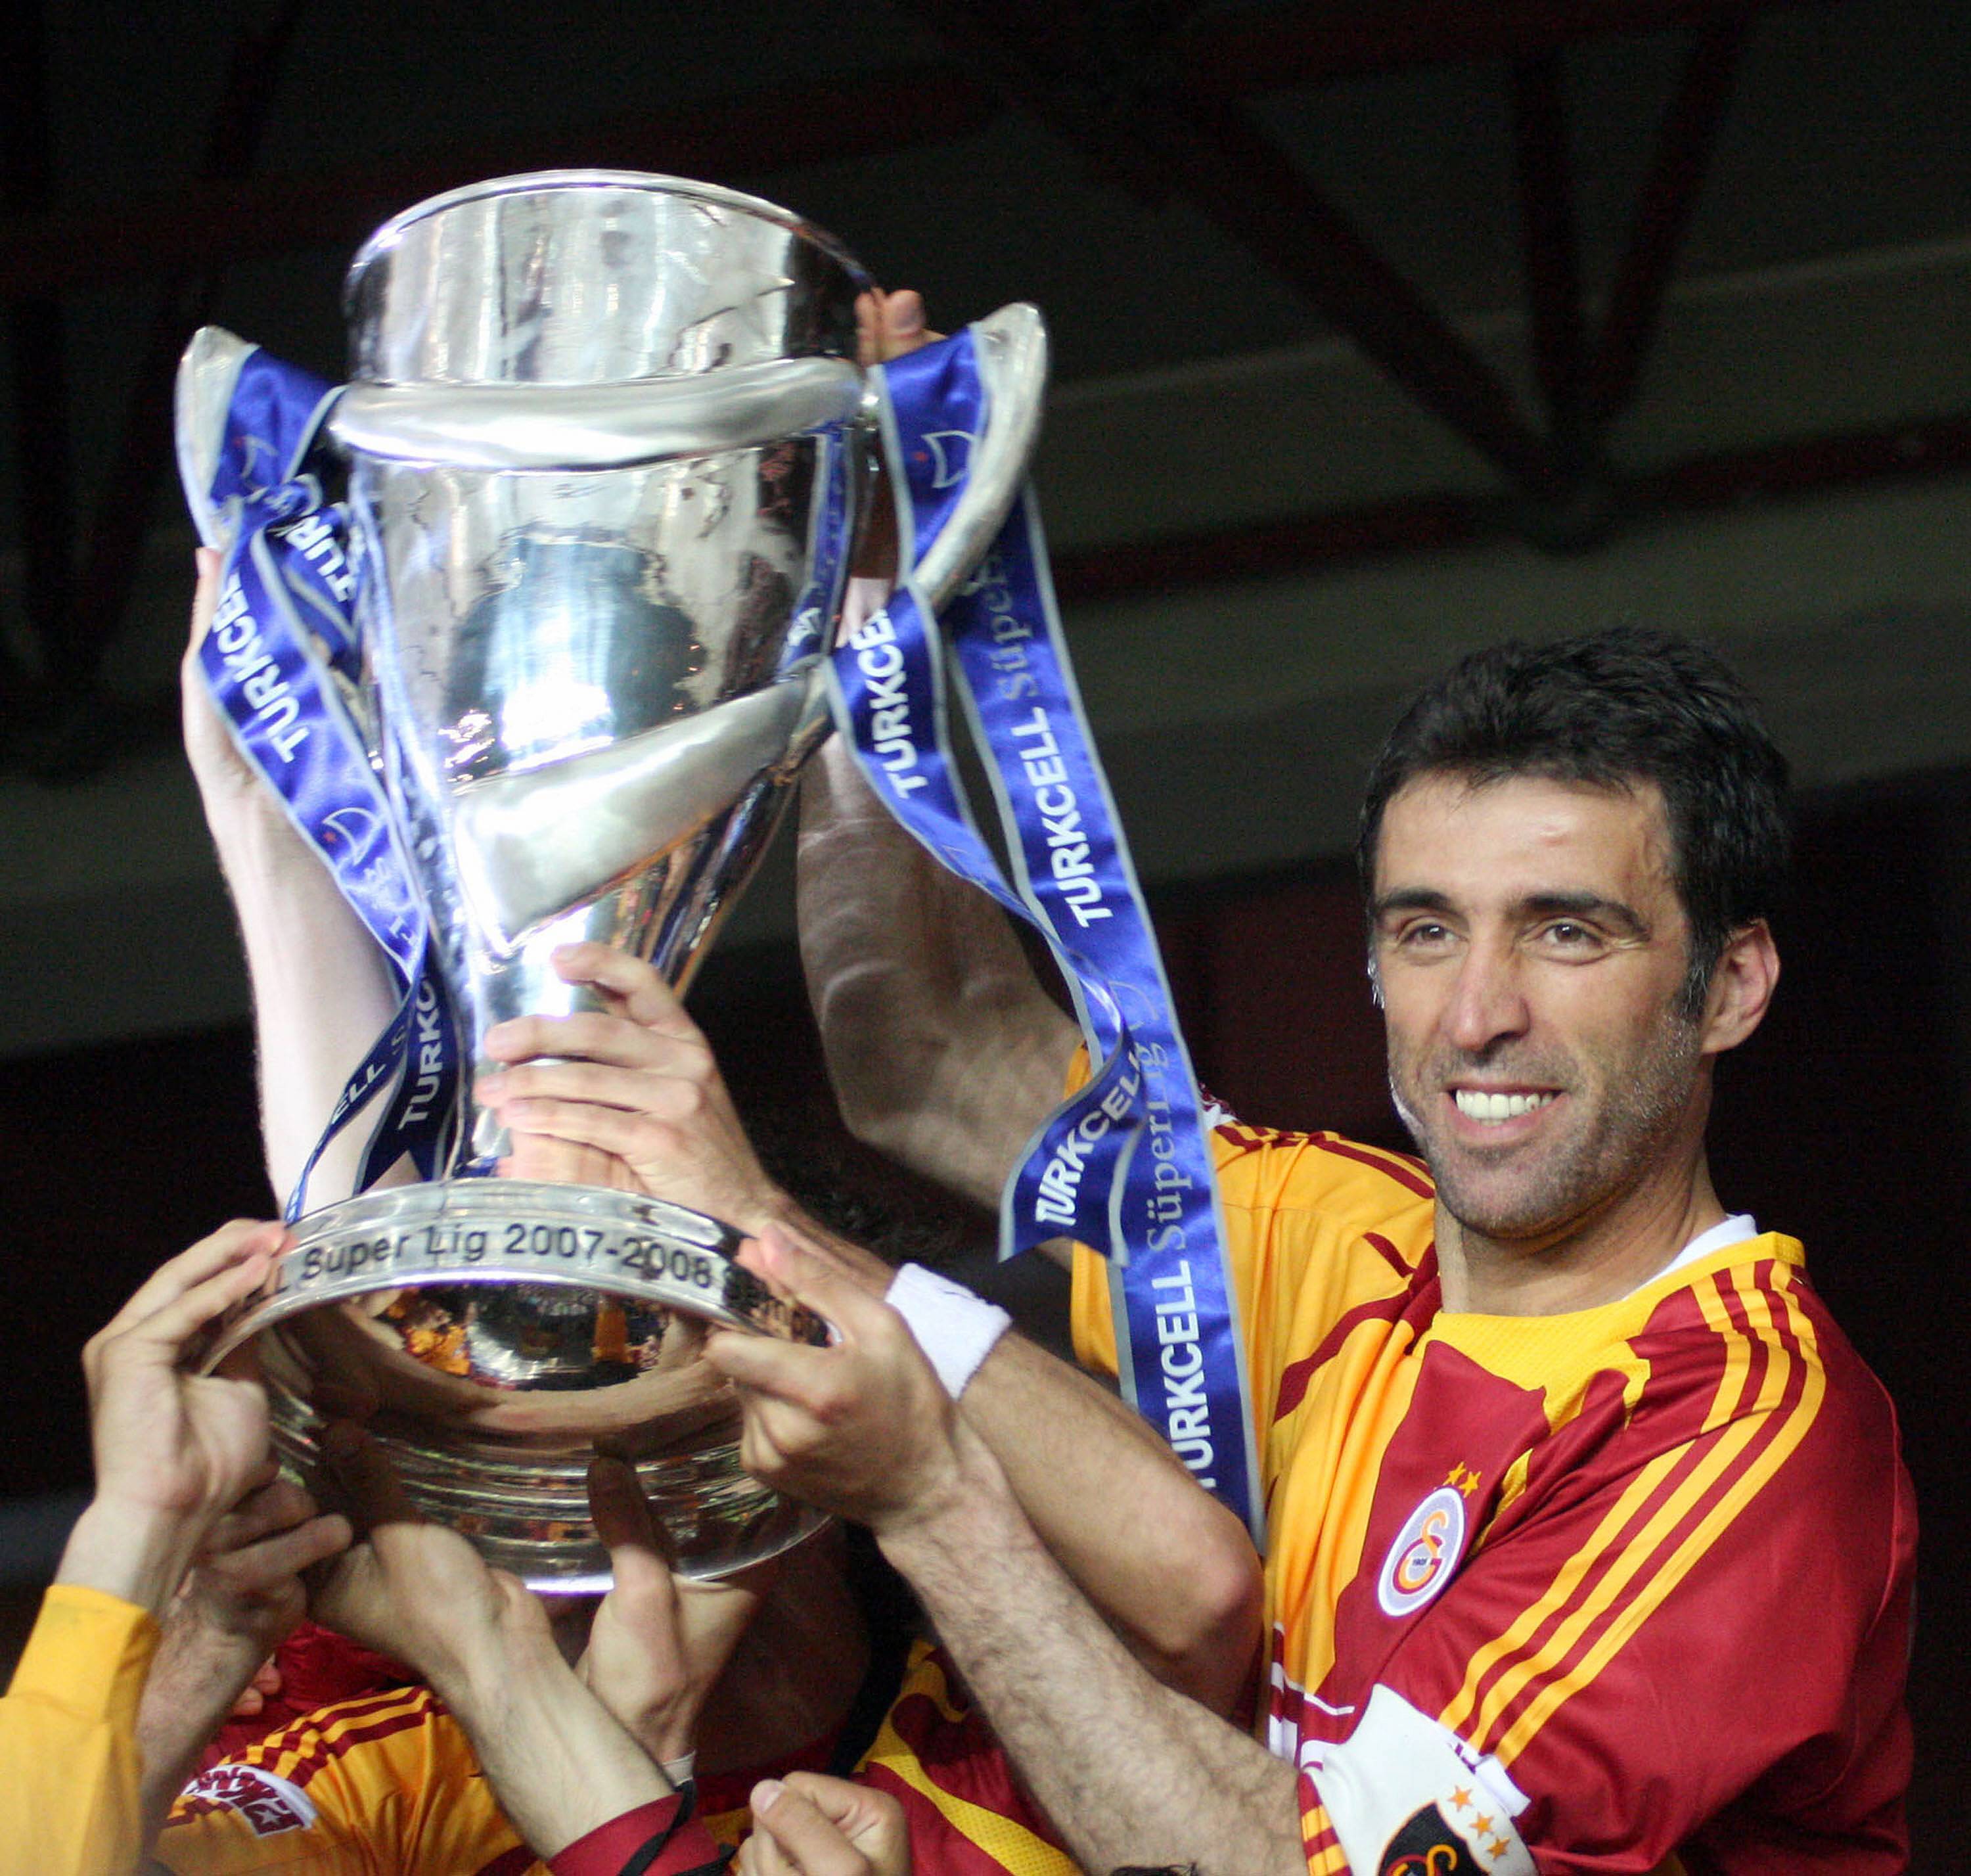 Hakan S¸k¸r pr‰sentiert die Troph‰e - Galatasaray ist T¸rkischer Meister 2007/2008 - PUBLICATIONxNOTxINxTUR Hakan S¸k¸r presents The Trophy Galatasaray is Turkish Master 2007 2008 PUBLICATIONxNOTxINxTUR